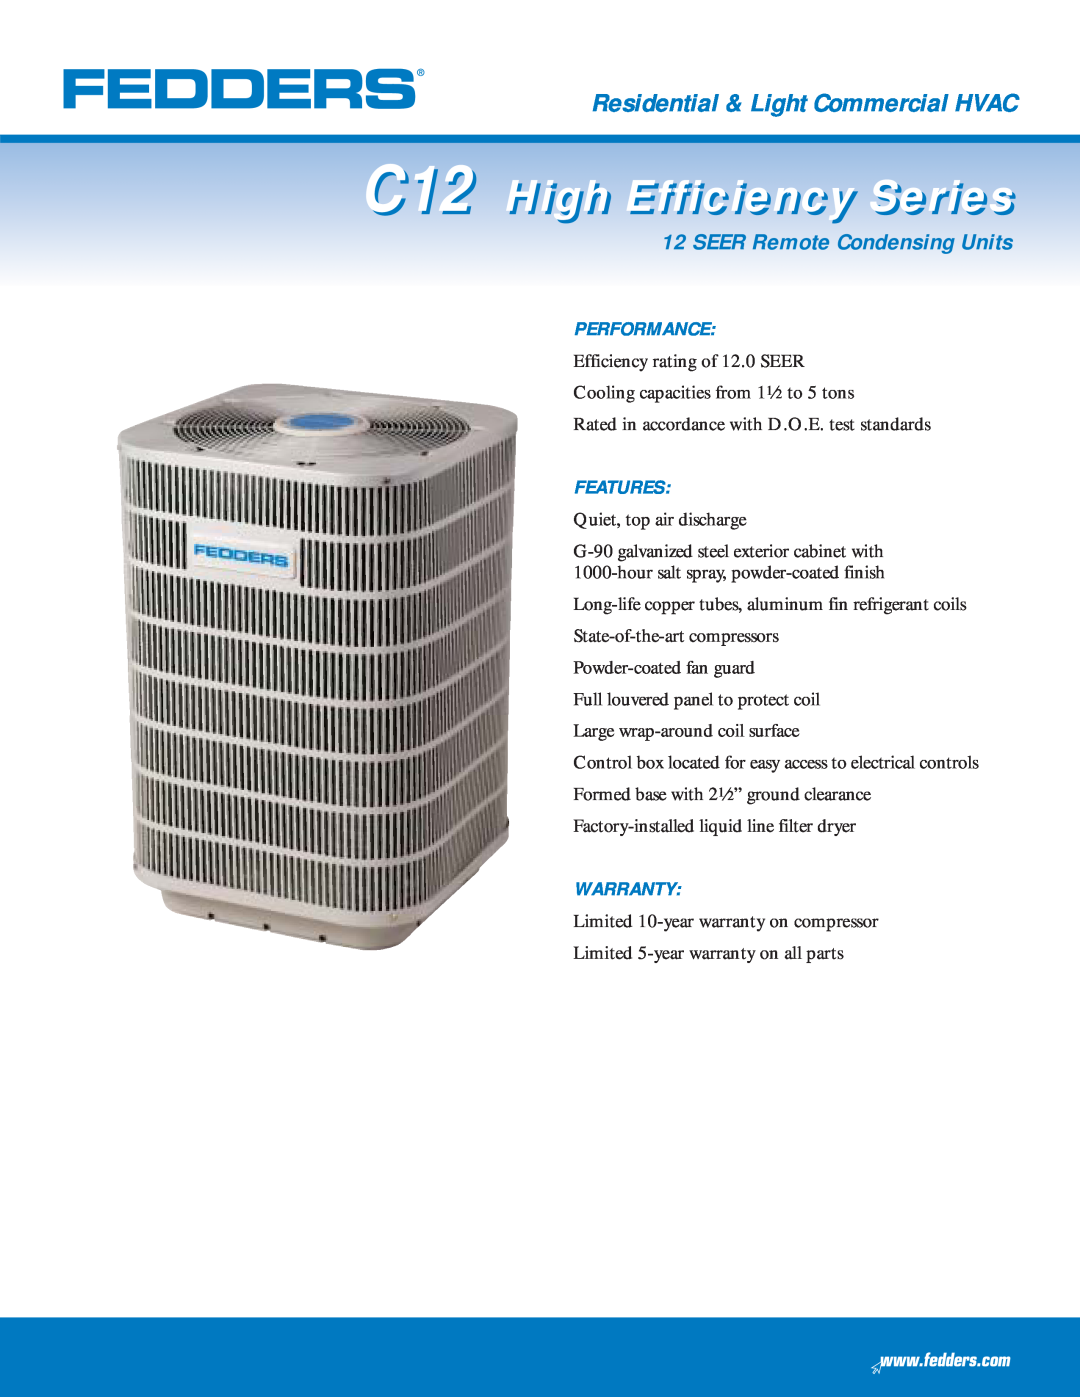 Fedders warranty C12 High Efficiency Series, Residential & Light Commercial HVAC, SEER Remote Condensing Units 